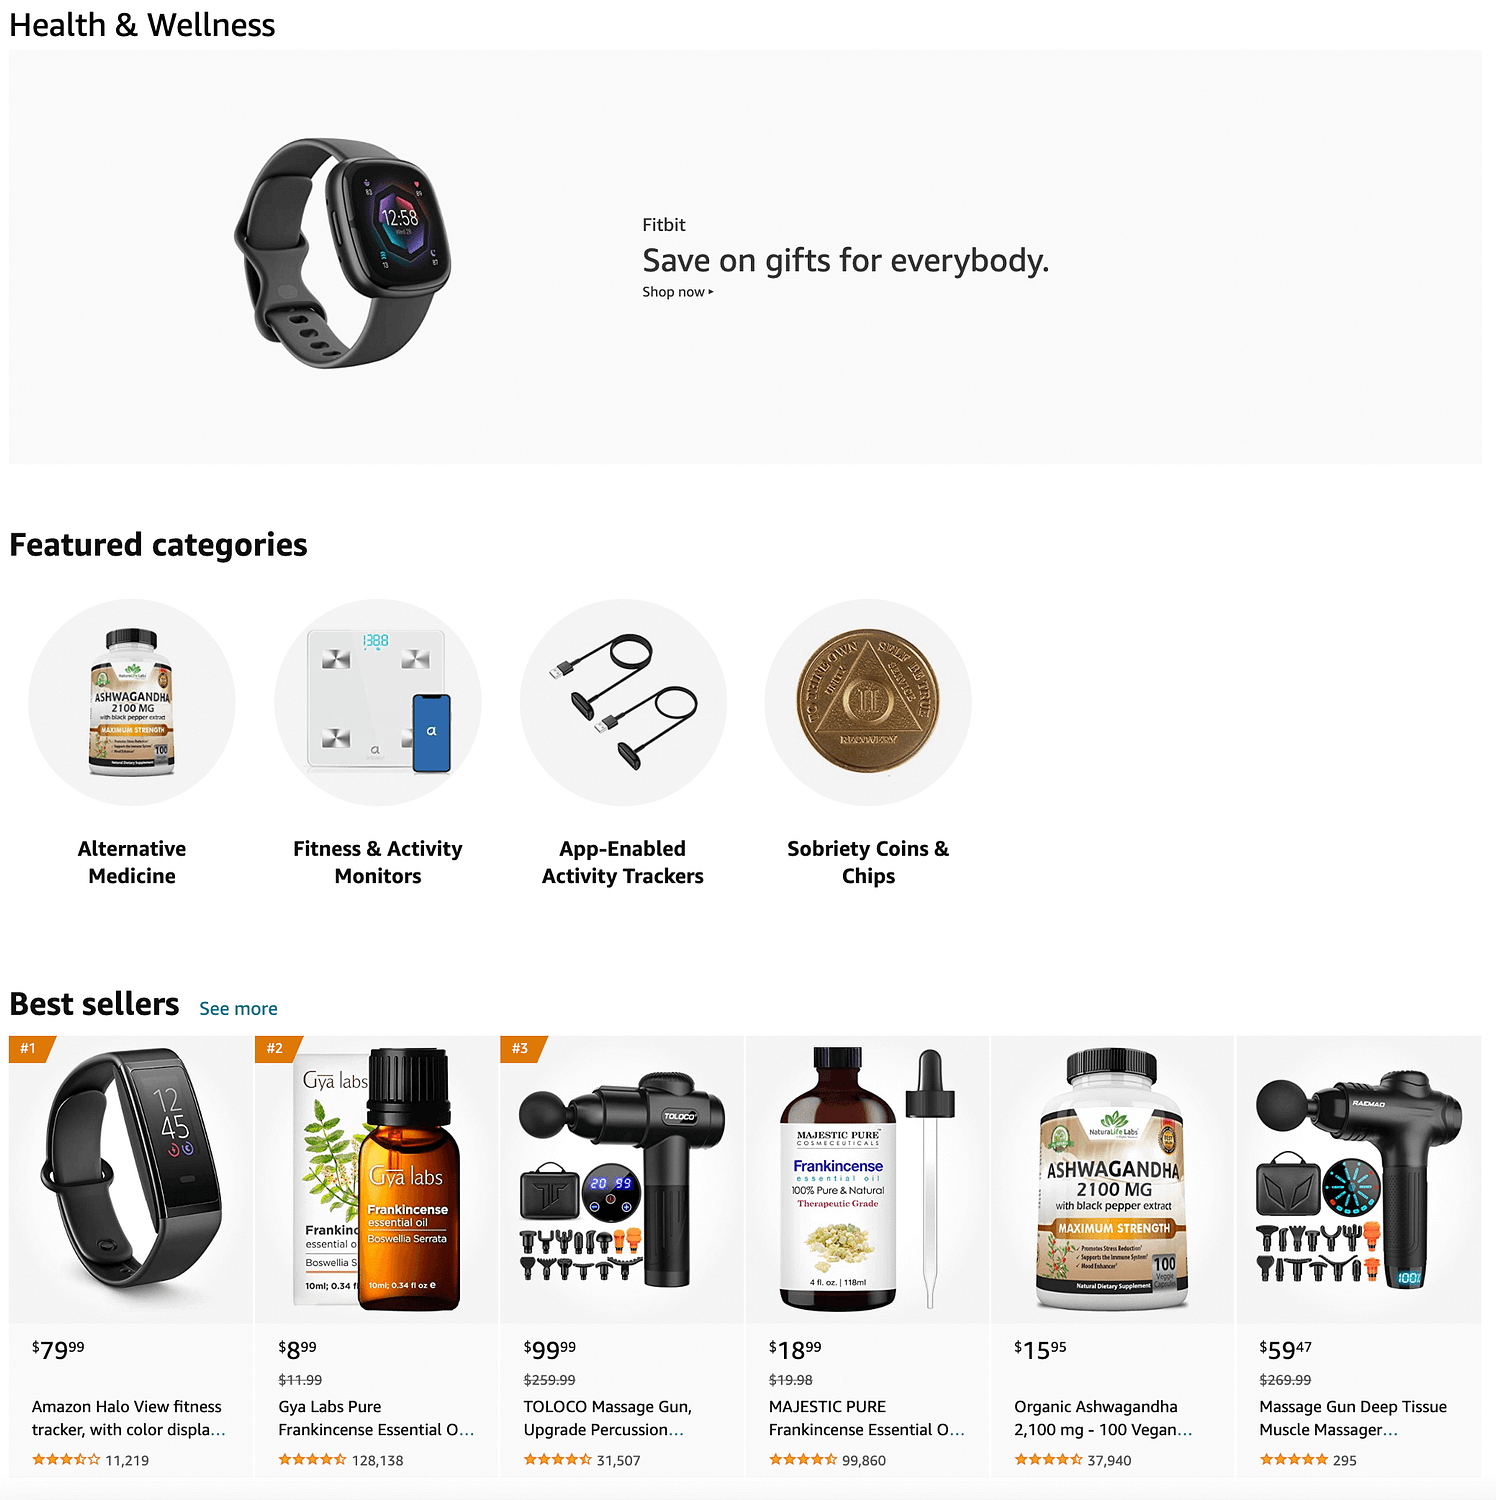 Amazon product categories